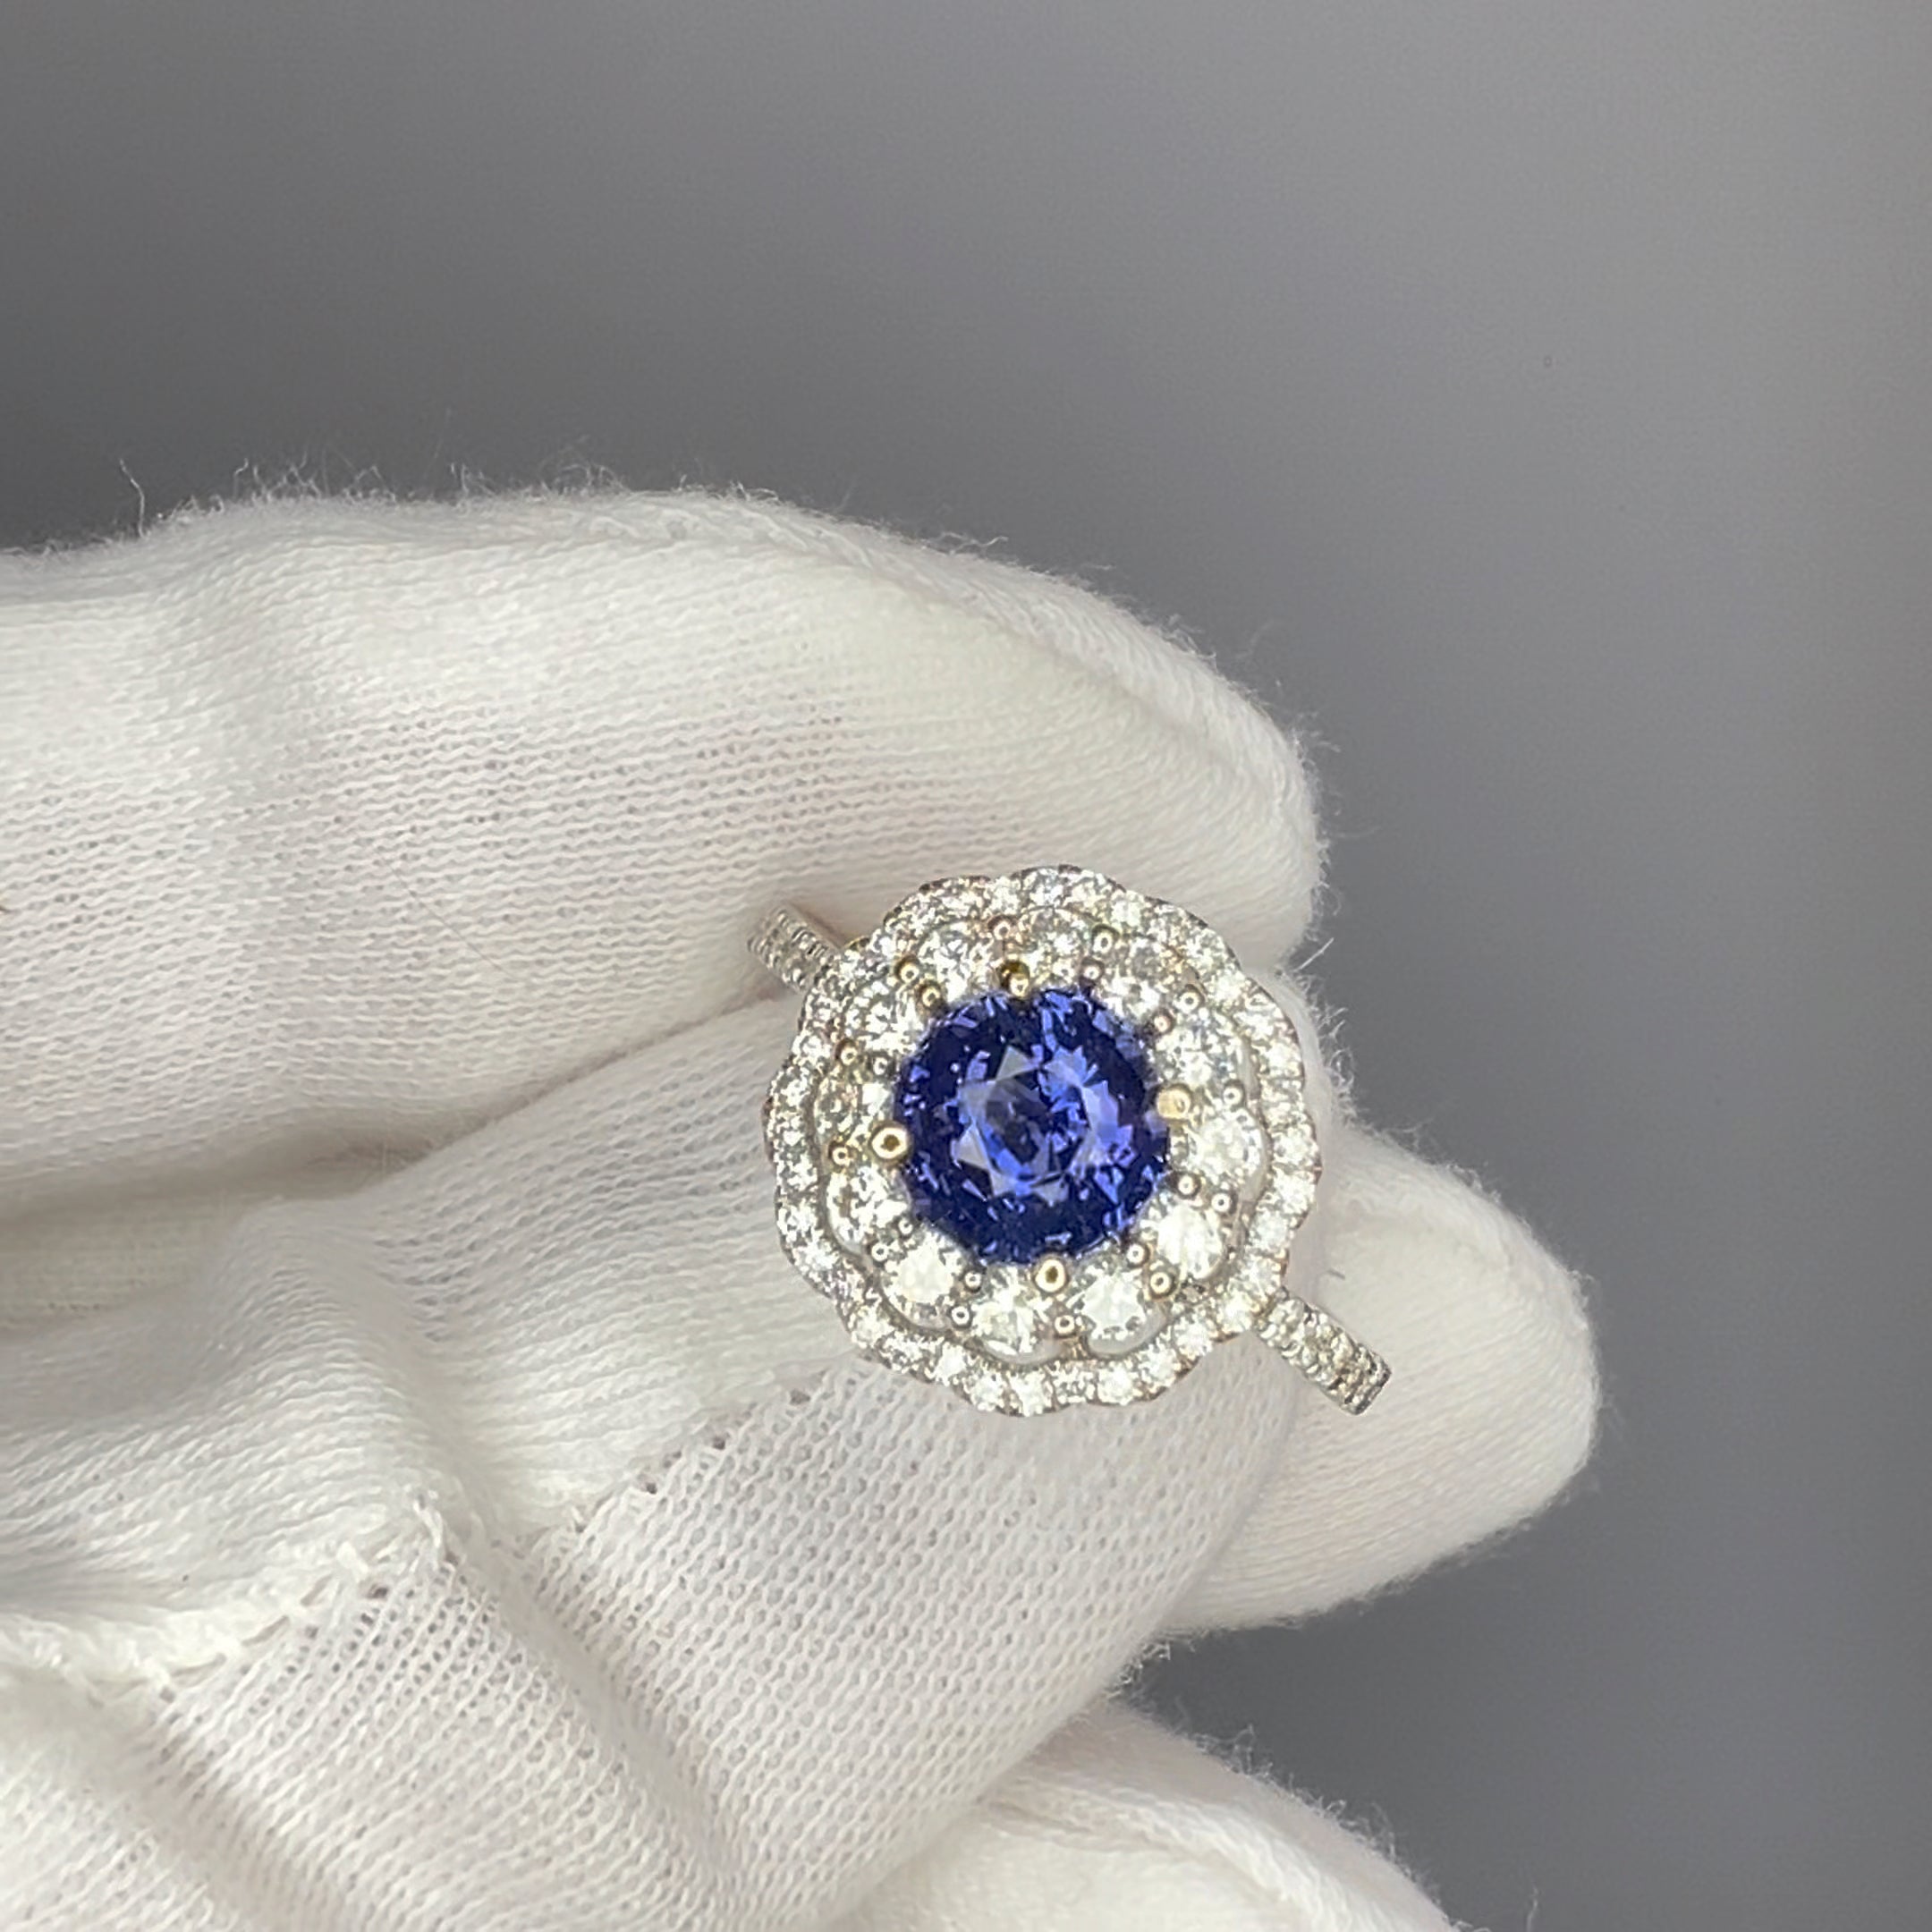 Cobalt blue spinel engagement ring held in white gloves